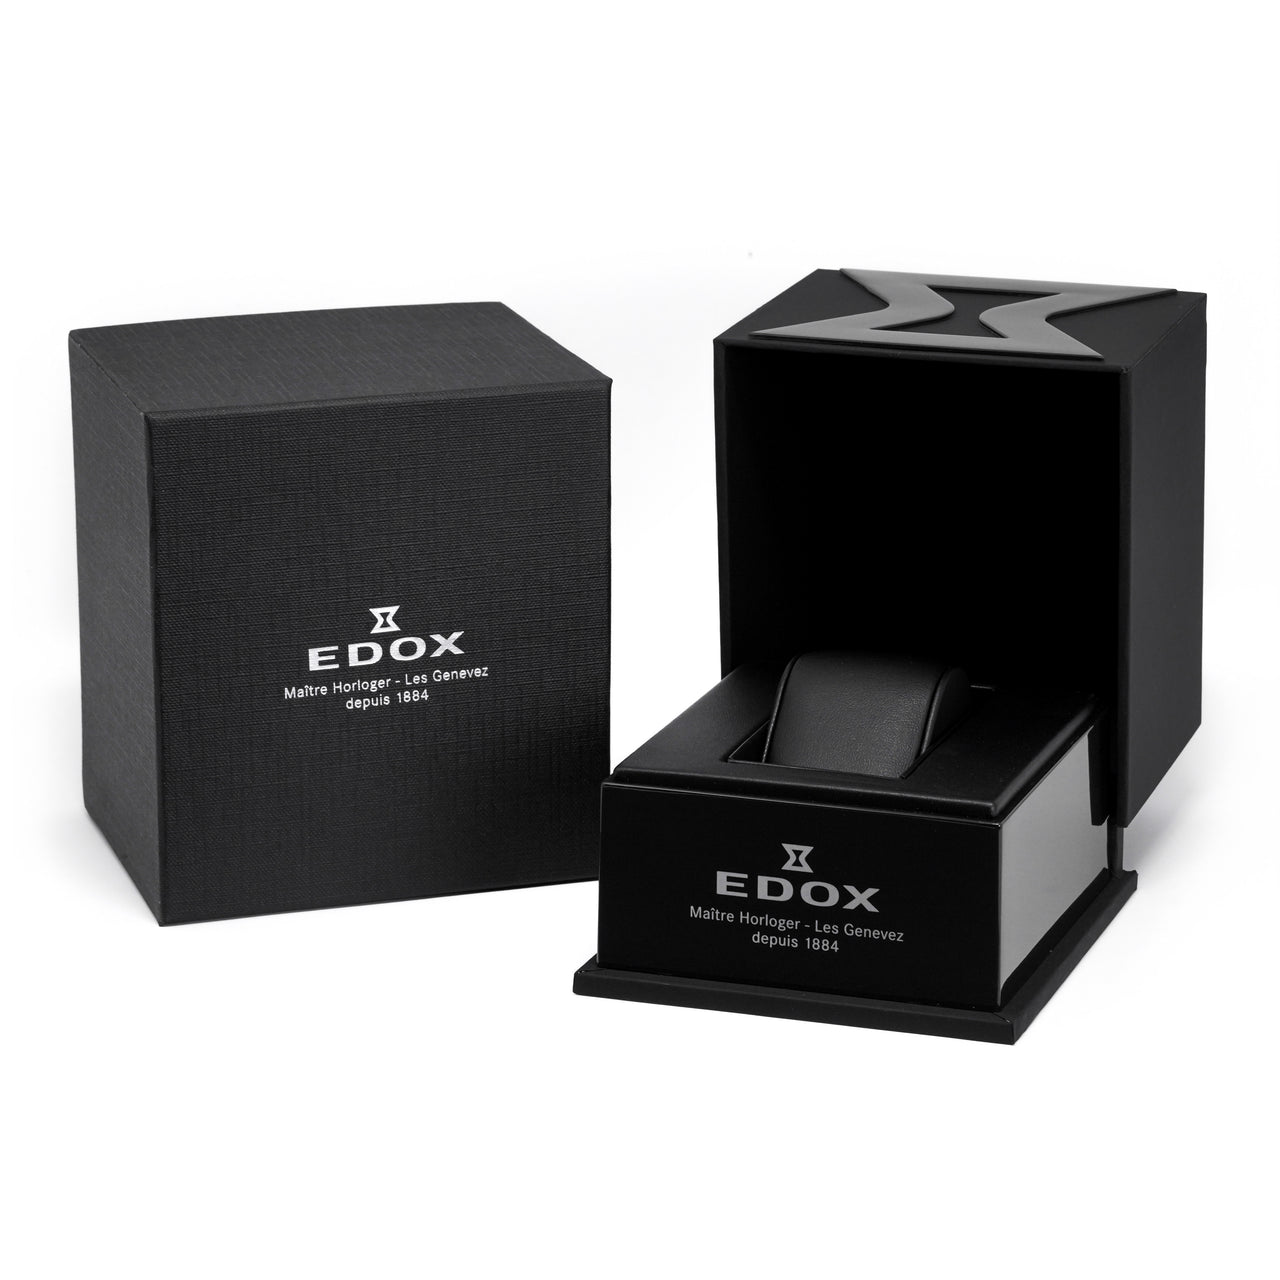 Edox Men's Watch CO-1 Chronograph Black Titanium 10242-TINM-GIDNO